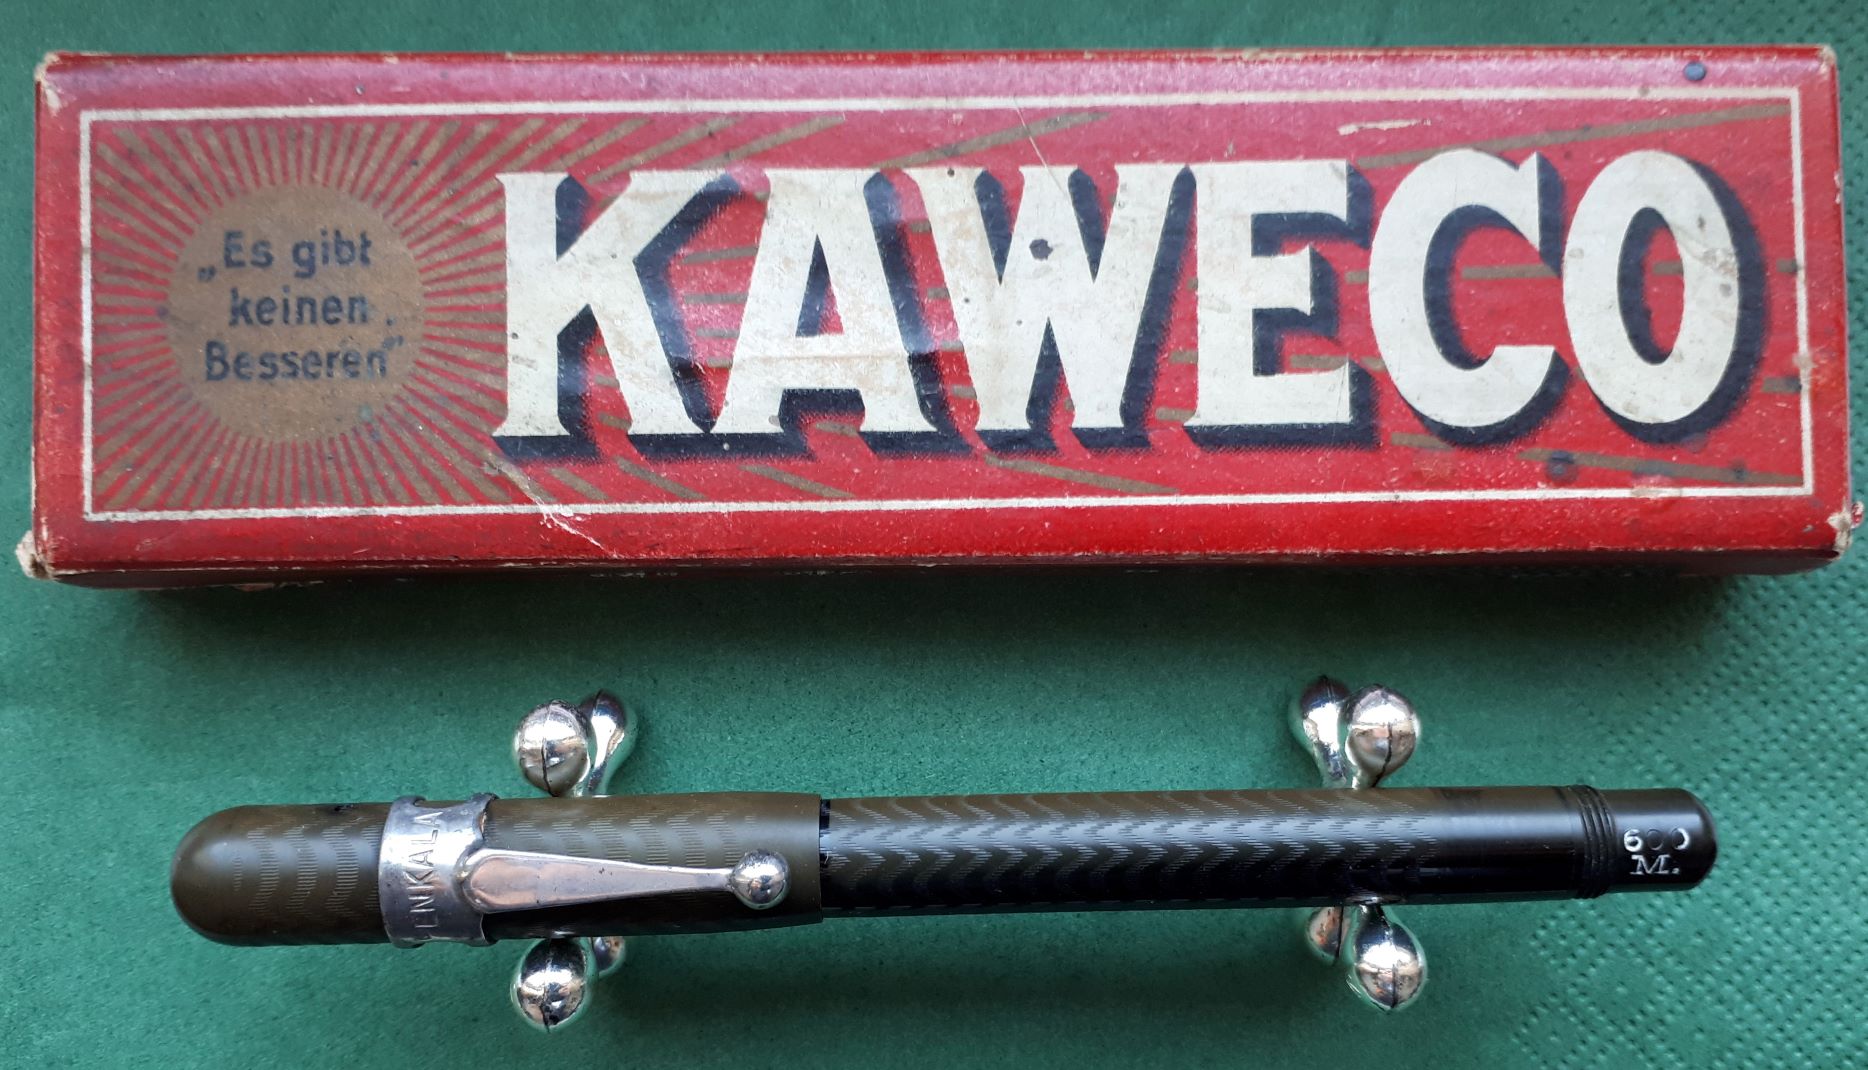 Kawaco 2019-04-21 08.22.21 kl.jpg